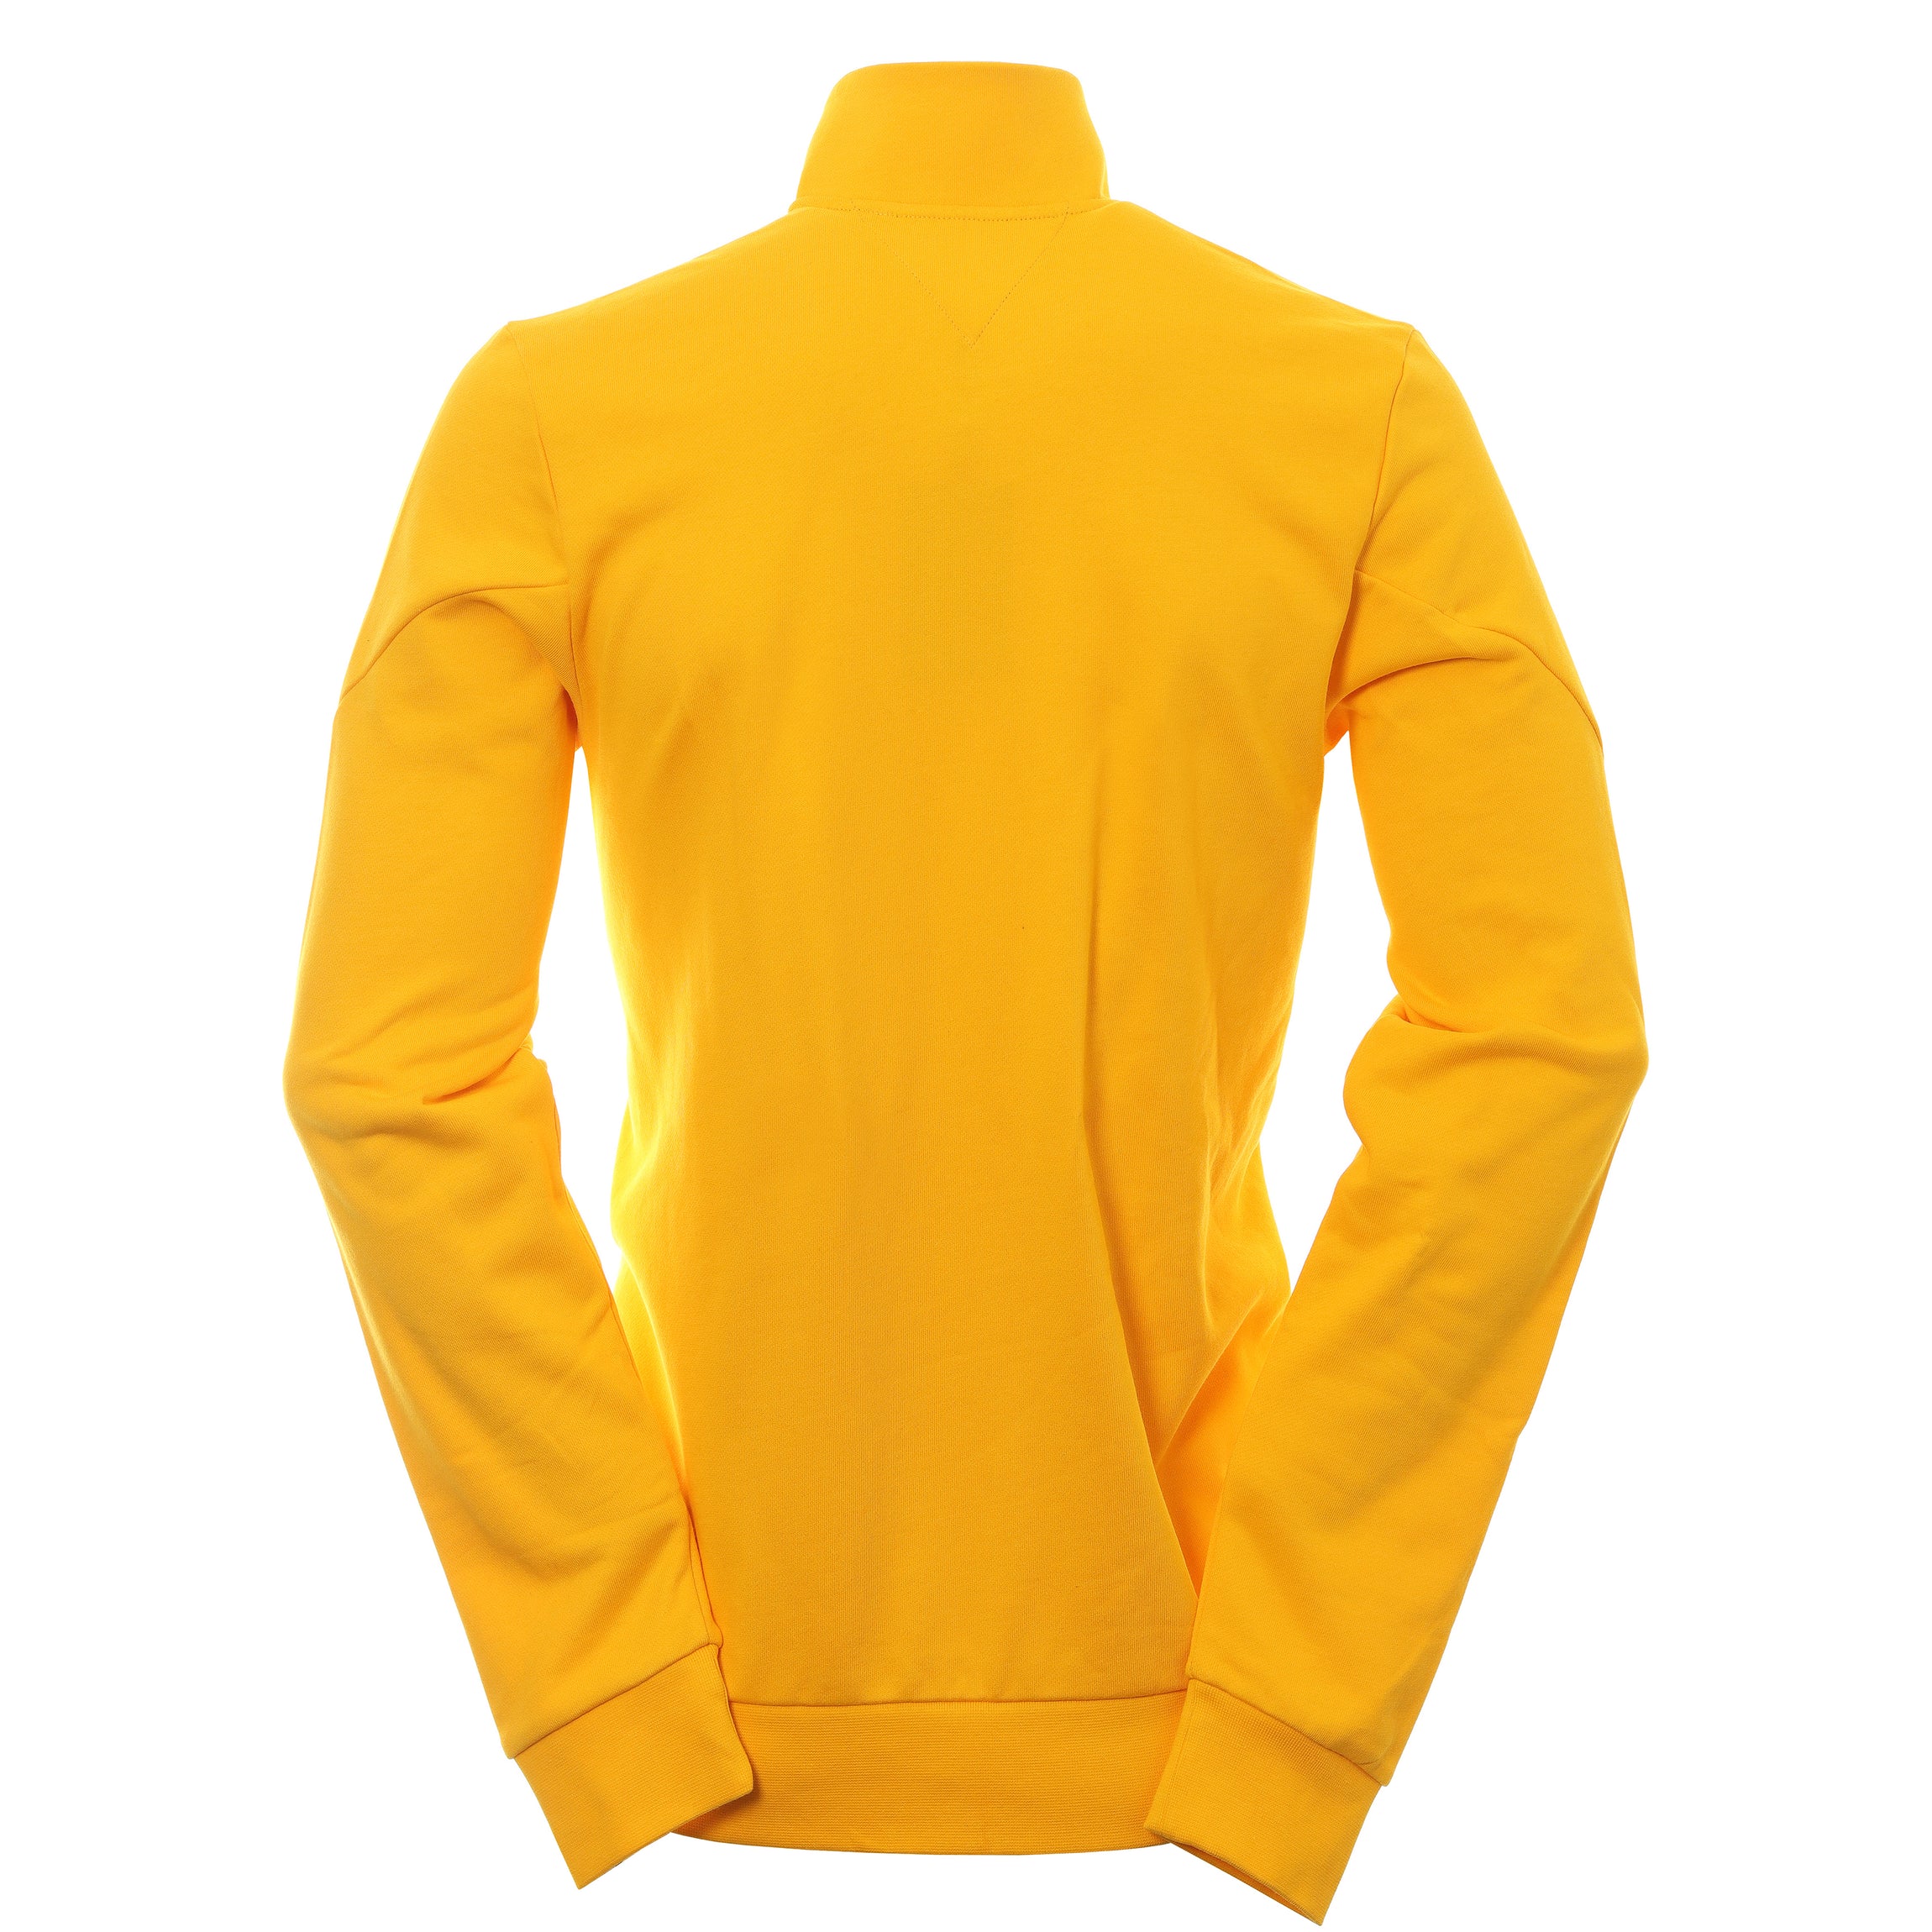 TOMMY HILFIGER Essential Sweatshirt for Girls - TOMMY - Citysport